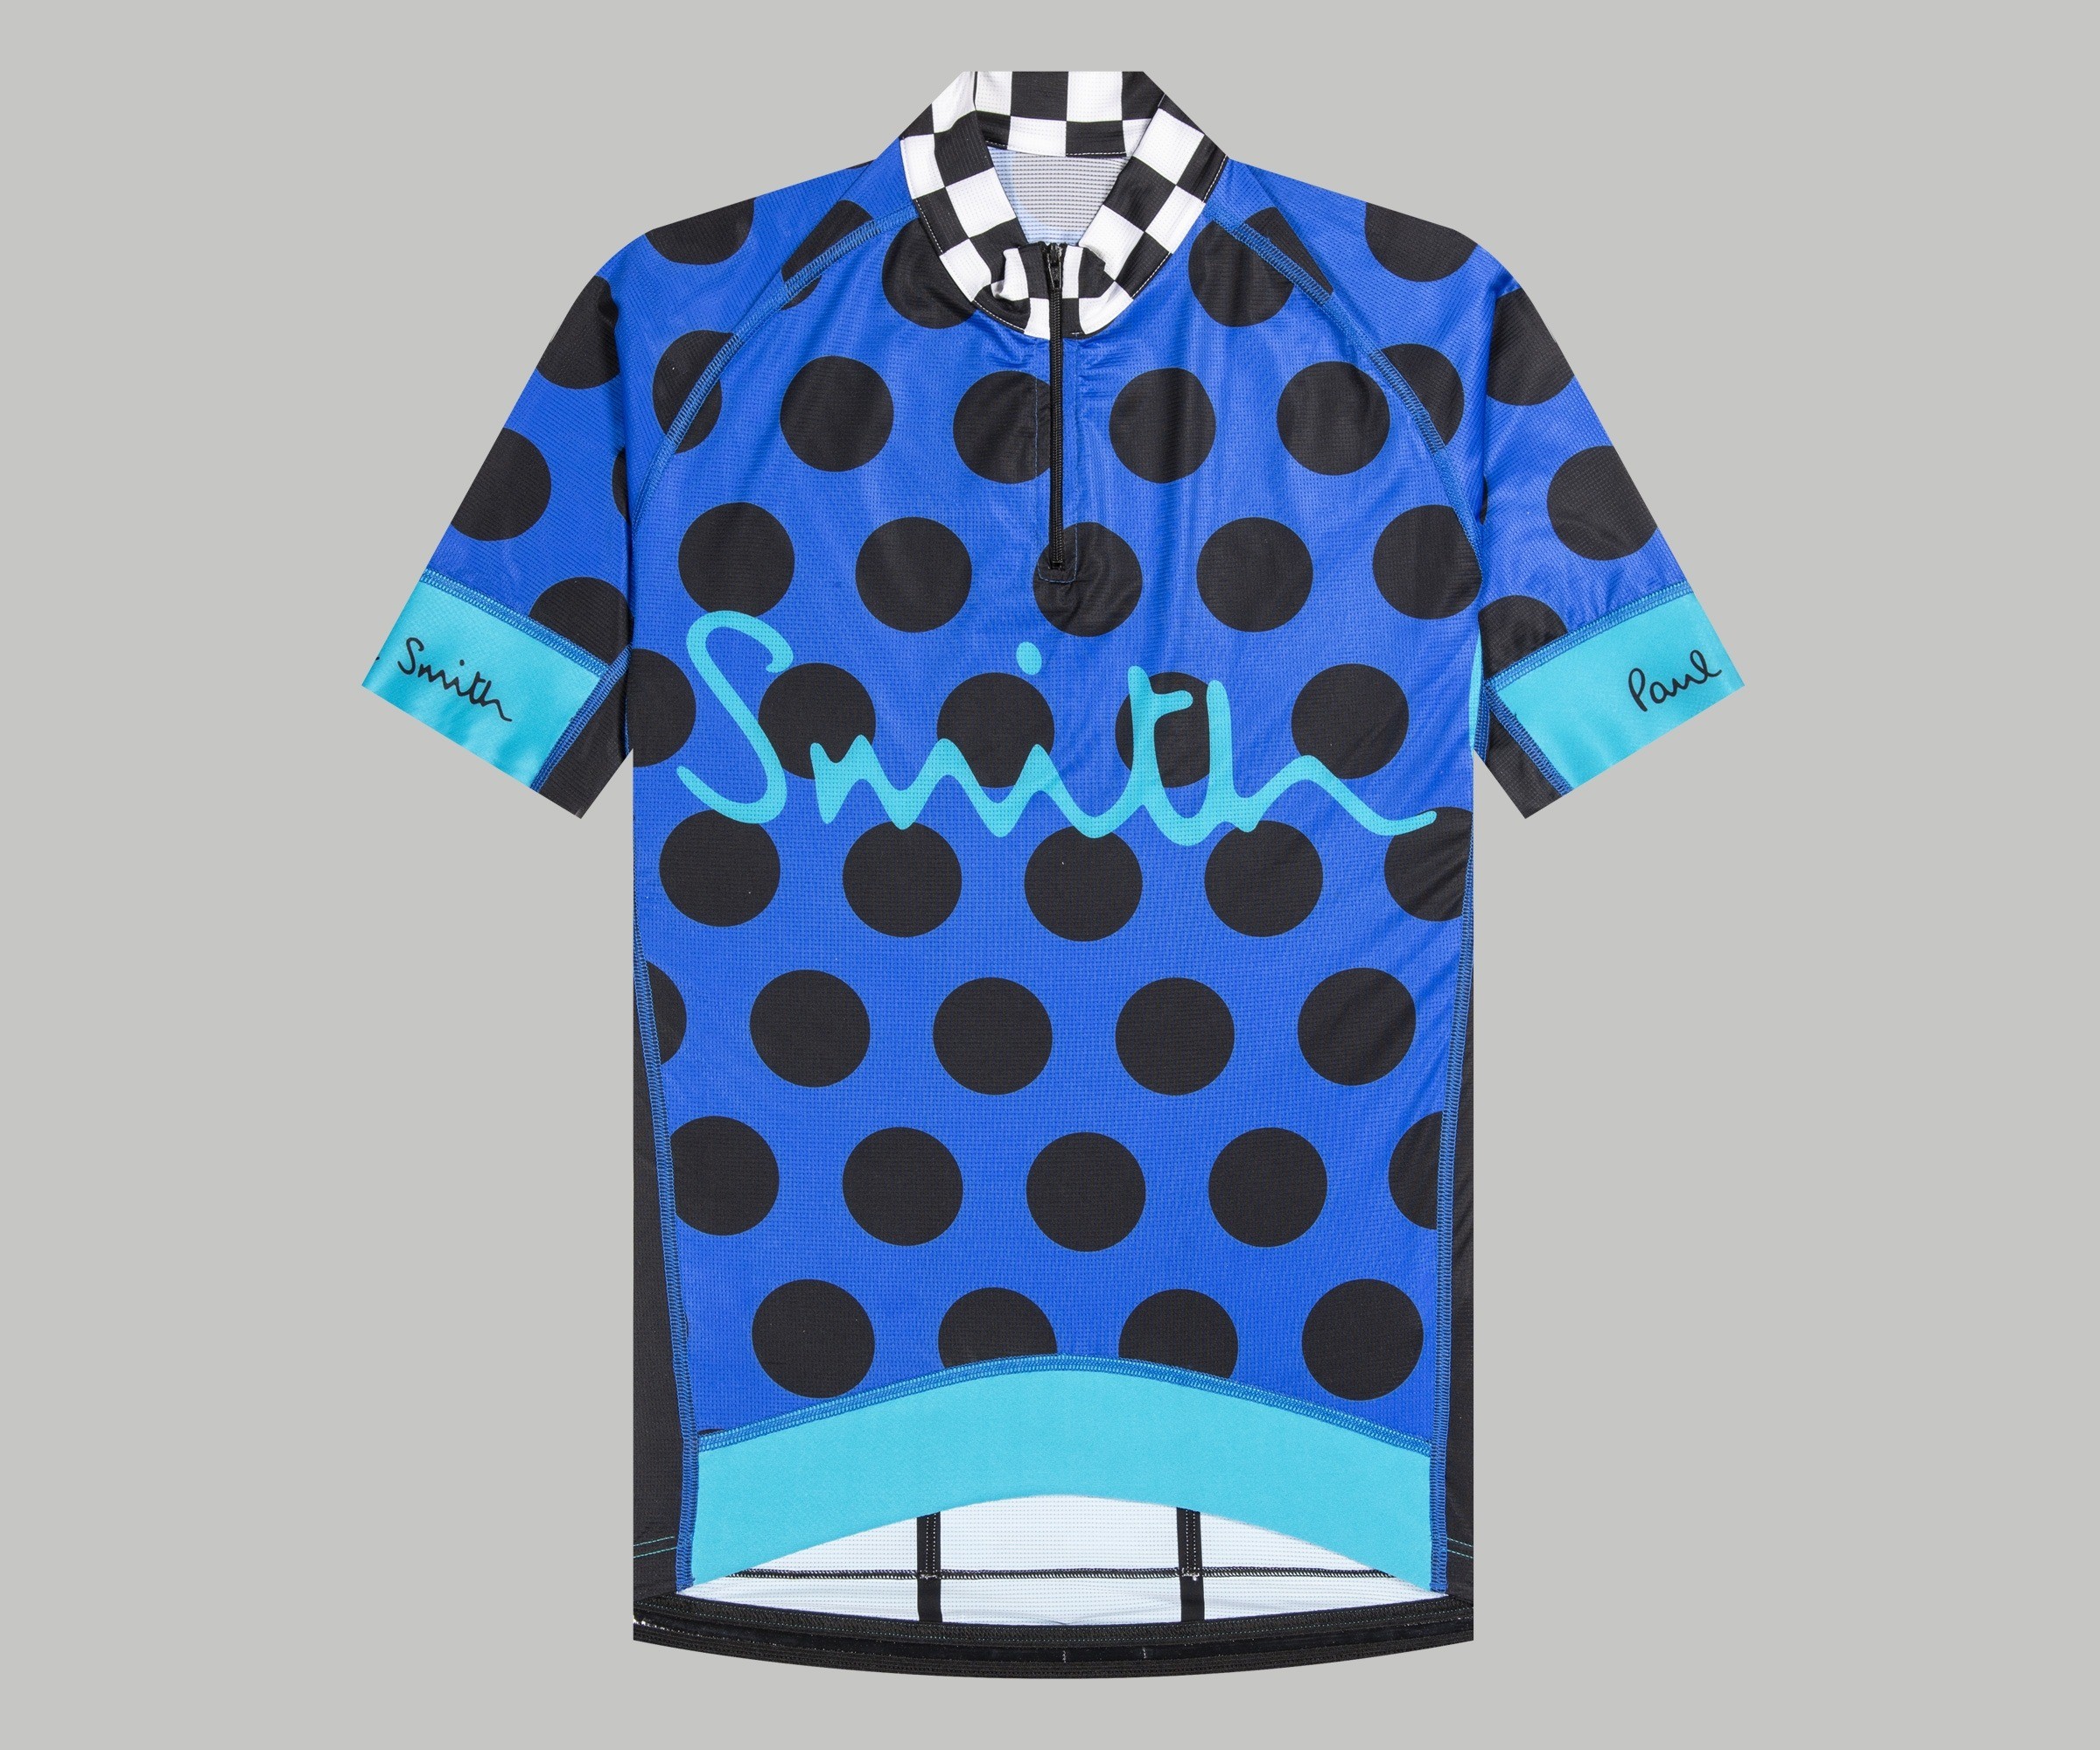 Paul Smith Cycling Jersey With Polka Dots Indigo